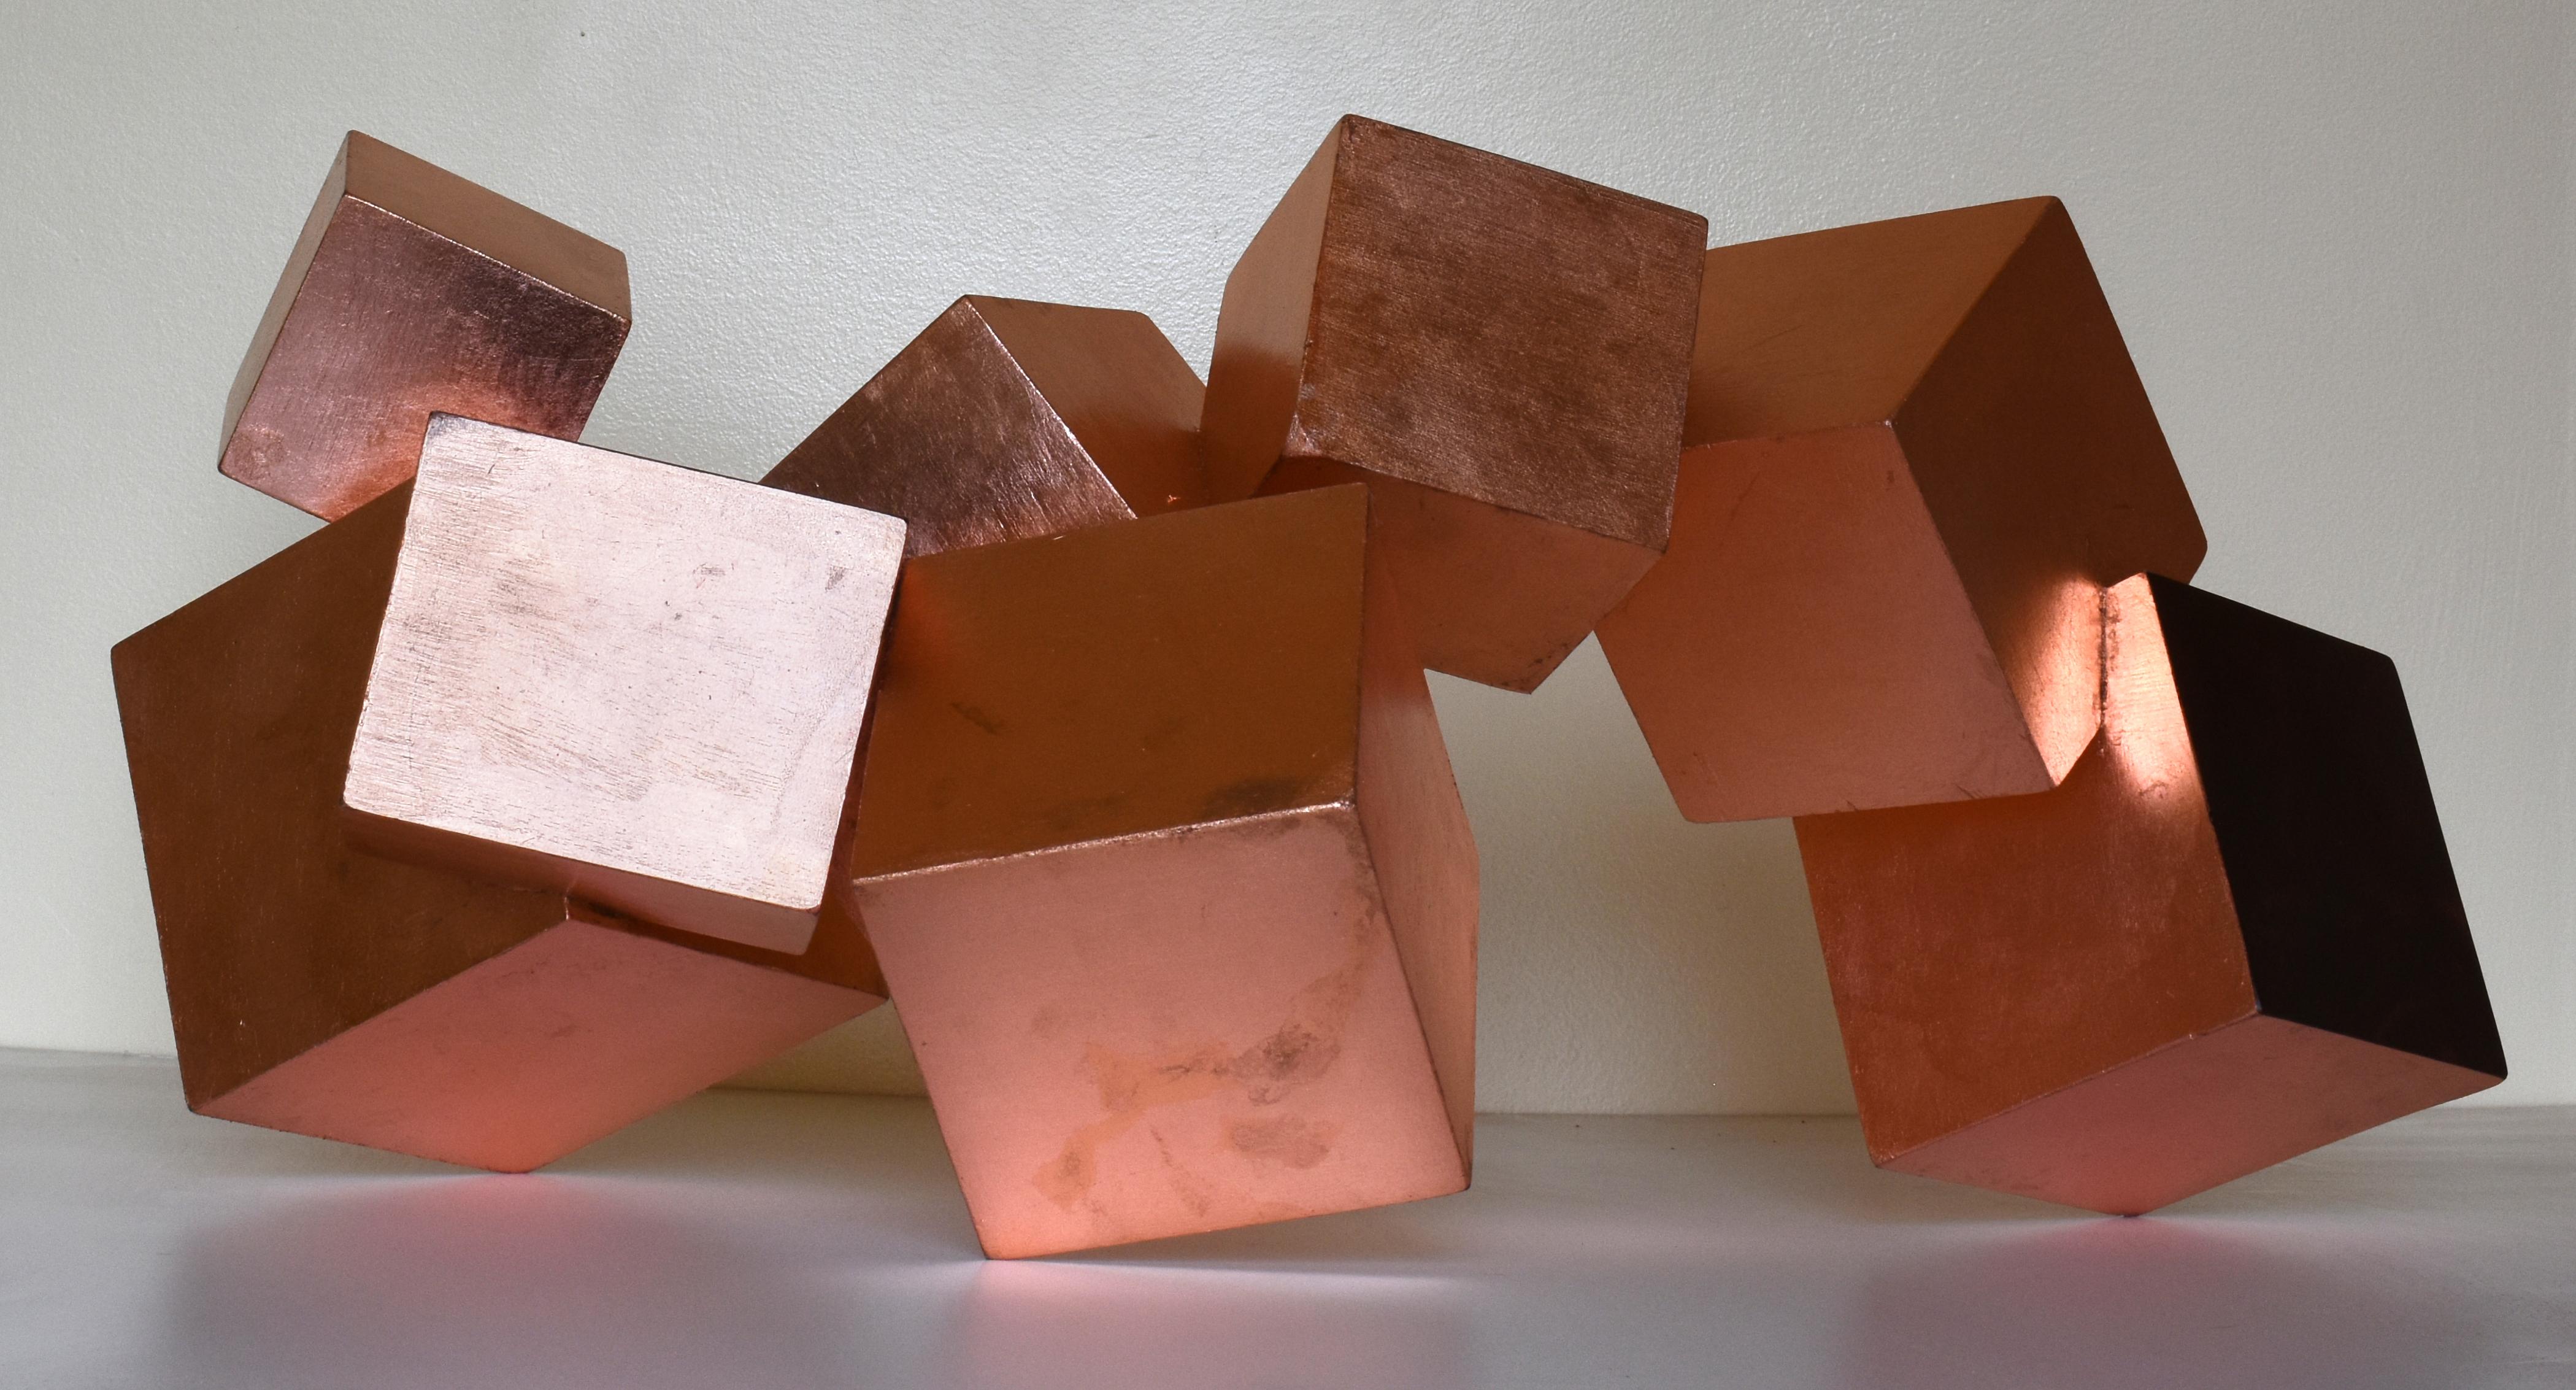 Copper and Mahogany Pyrite (exotic wood, metallic, cubic, table top sculpture) 7